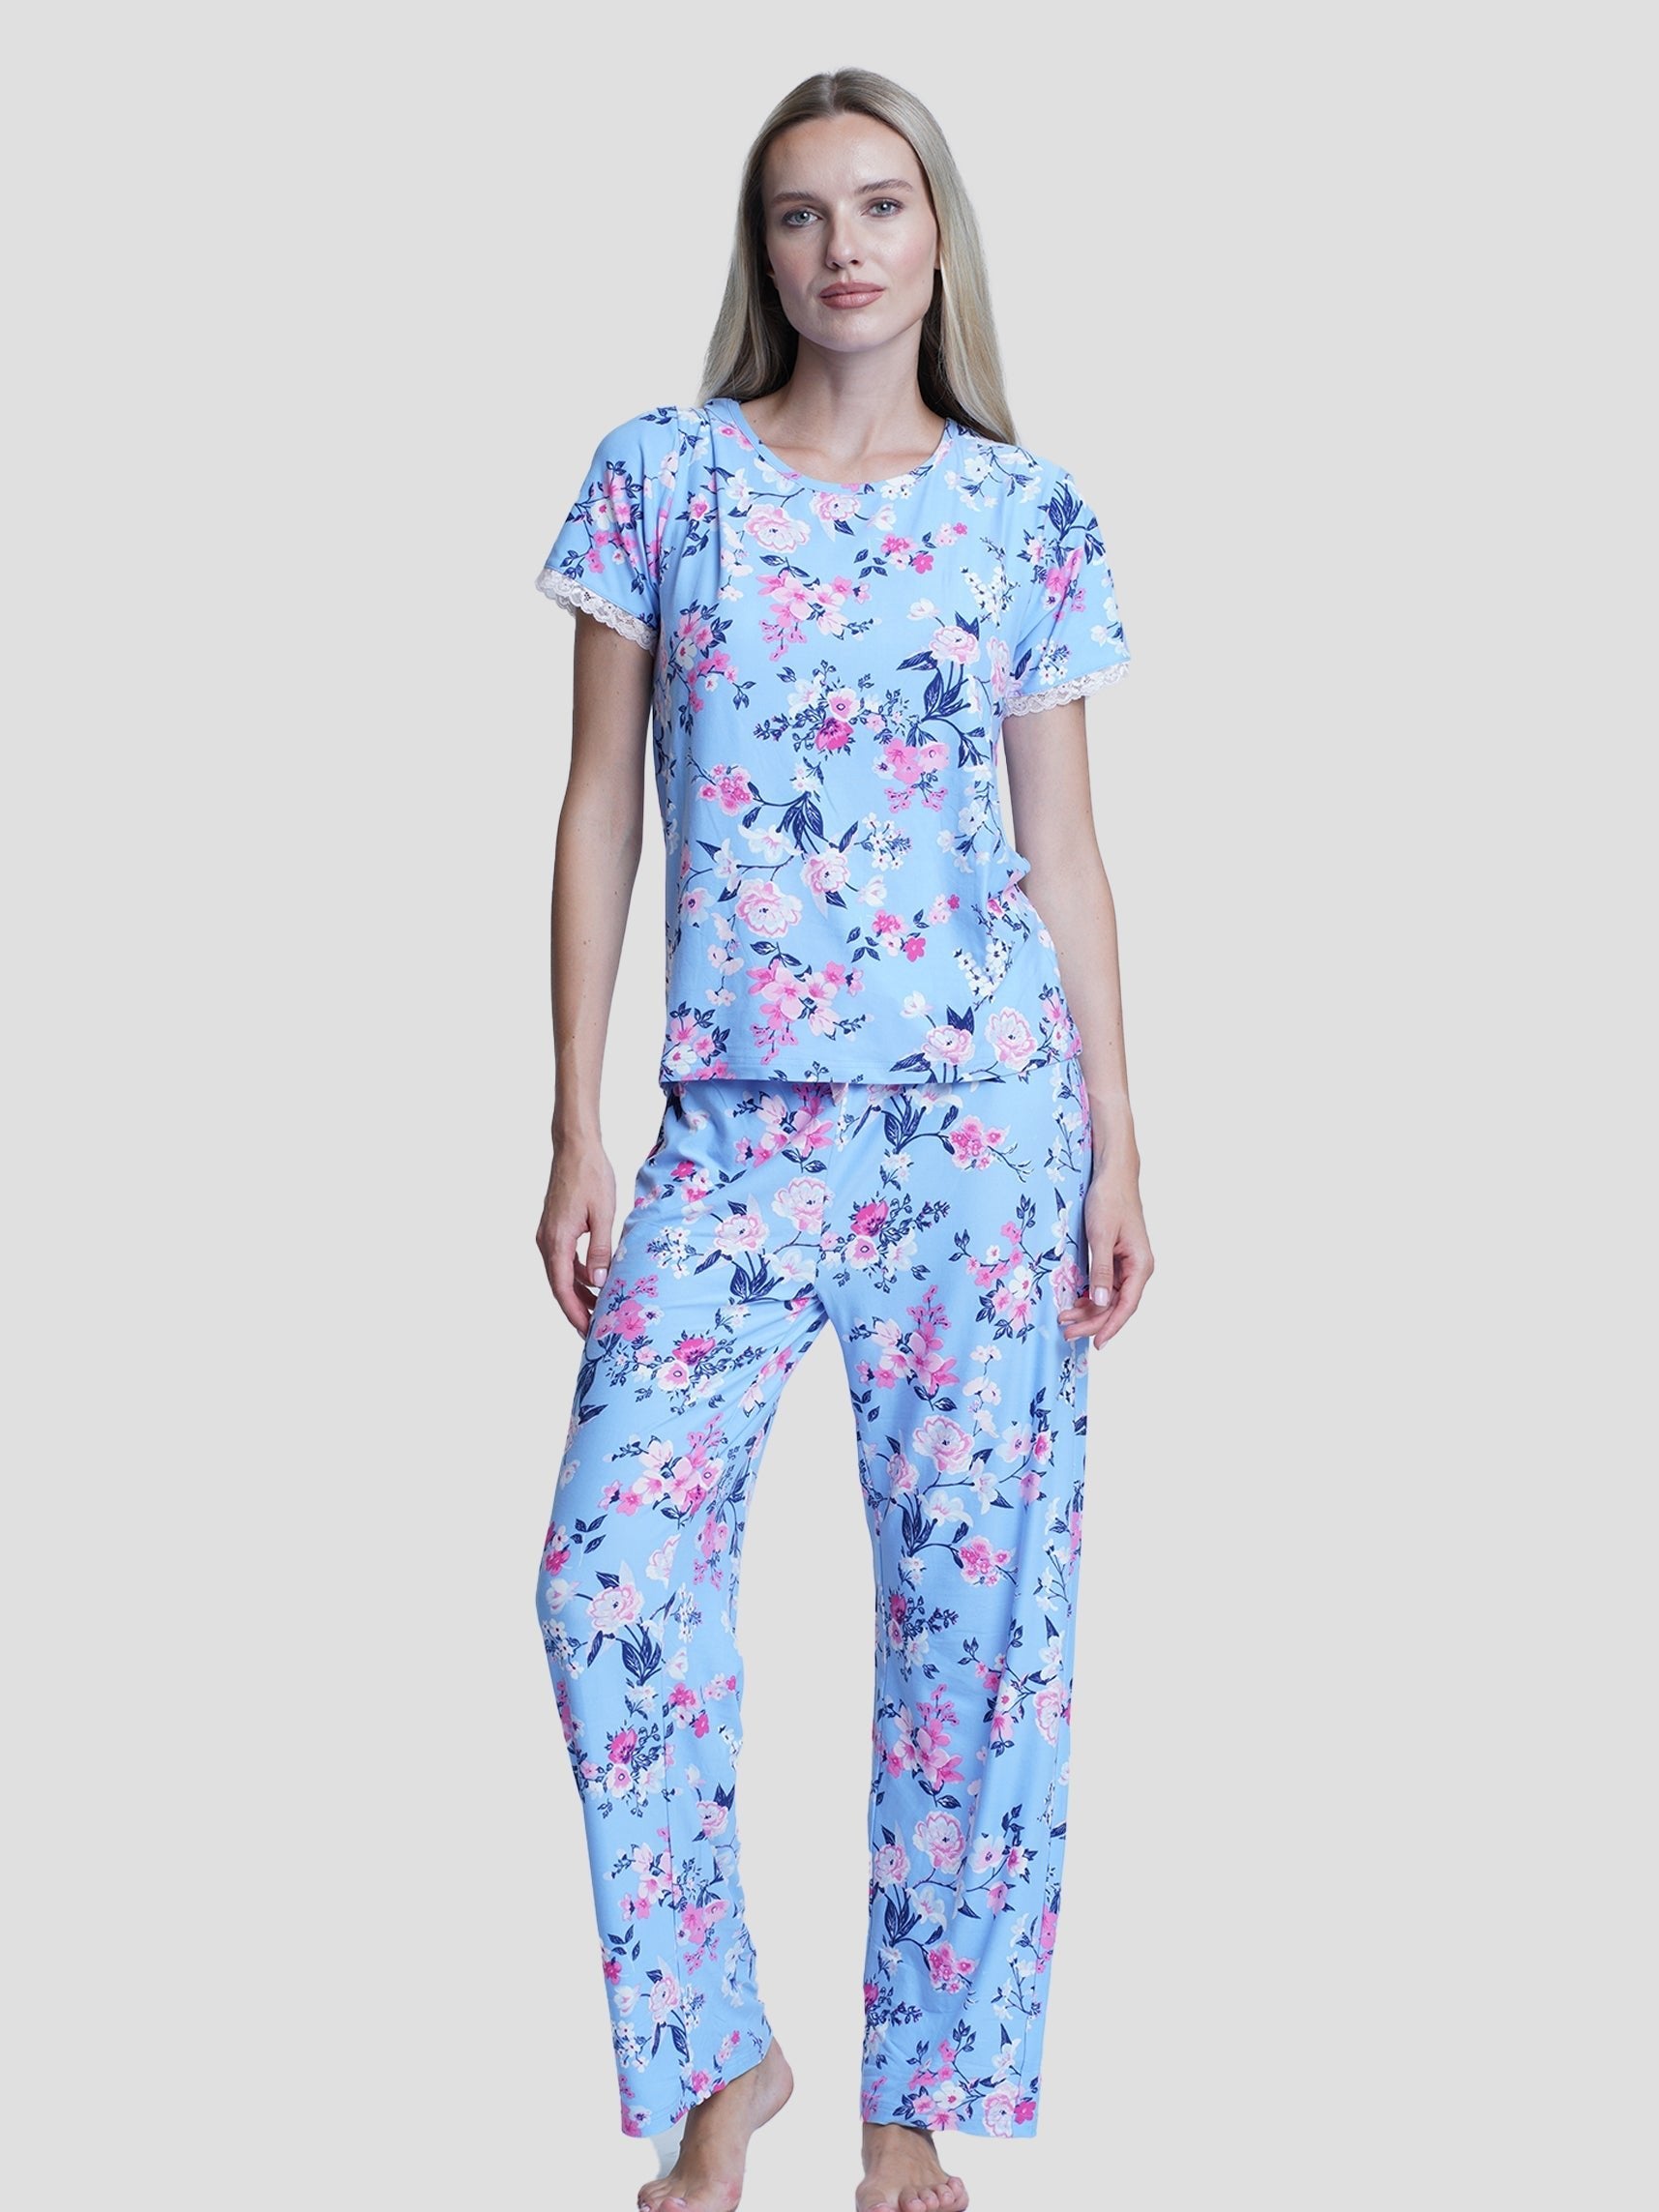 Menore Pajamas Set Short Sleeve Sleepwear Comfy Soft Ladies Button